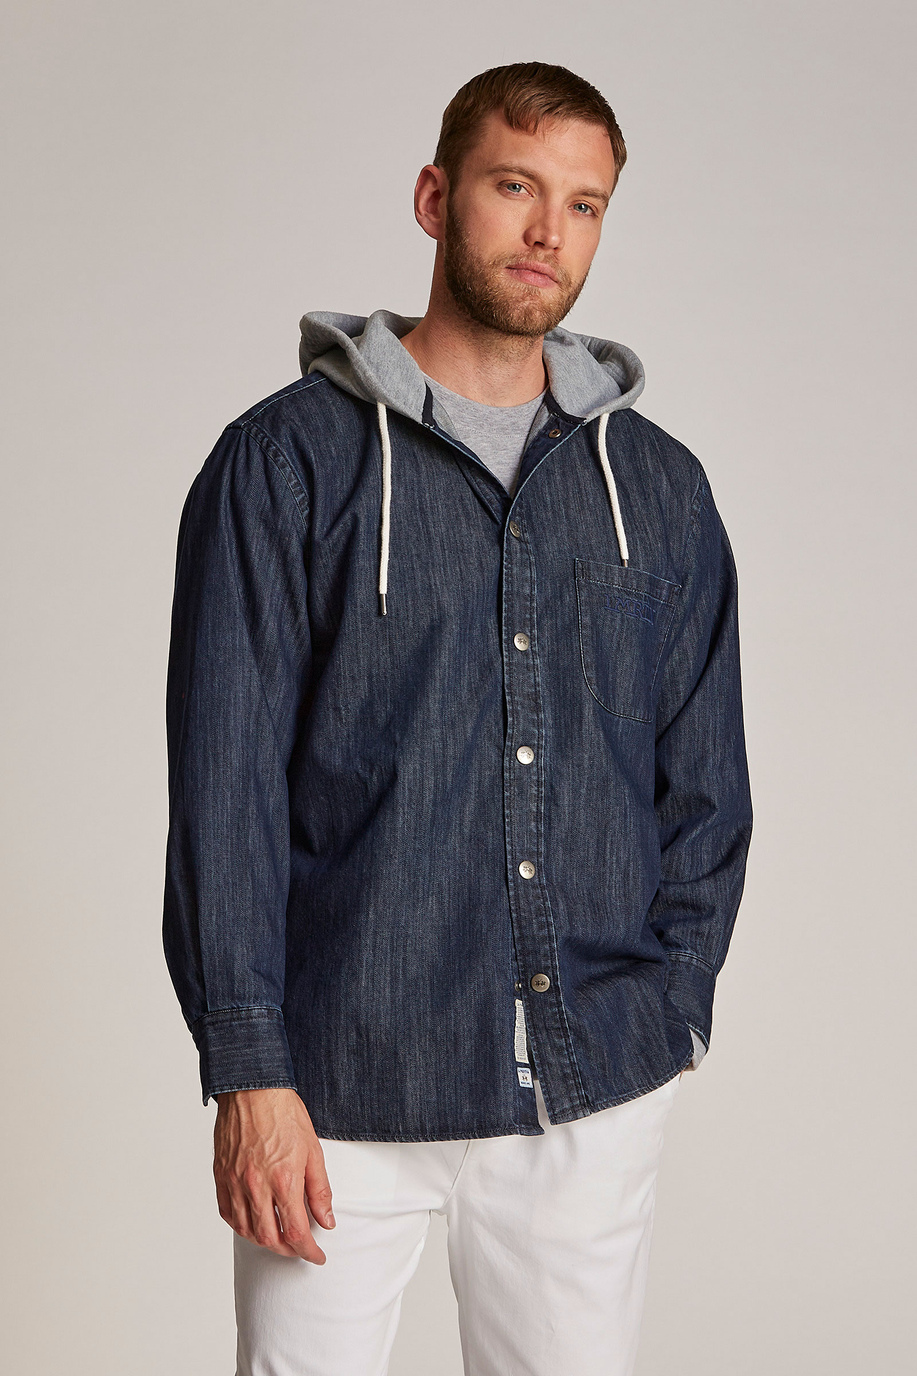 Chaqueta de hombre de algodón 100 % con capucha, modelo oversize - Camisas | La Martina - Official Online Shop